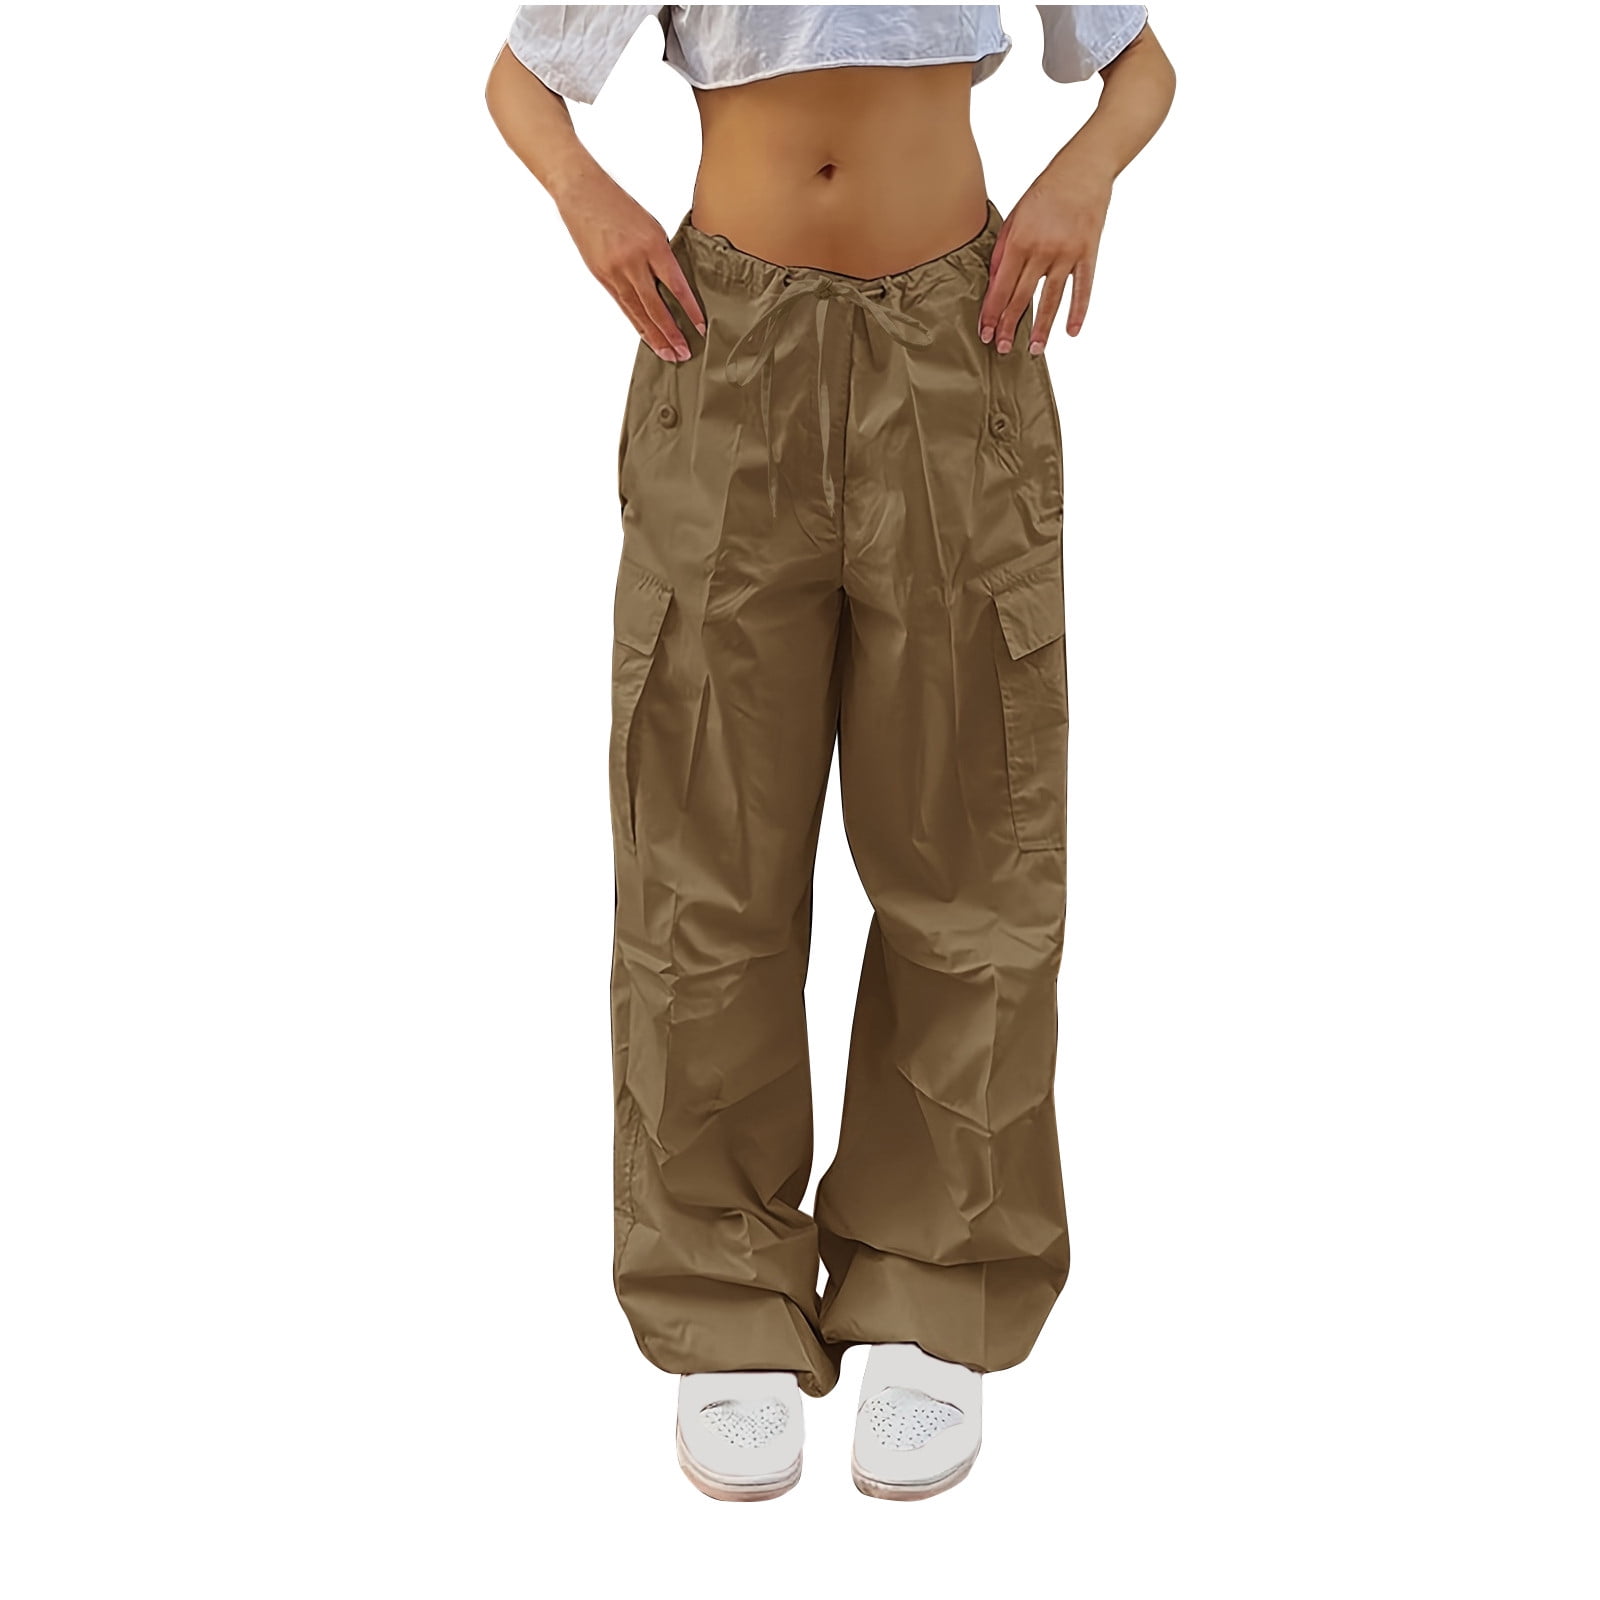 SMihono Clearance Teen Girls Full Length Trousers Cargo Pants